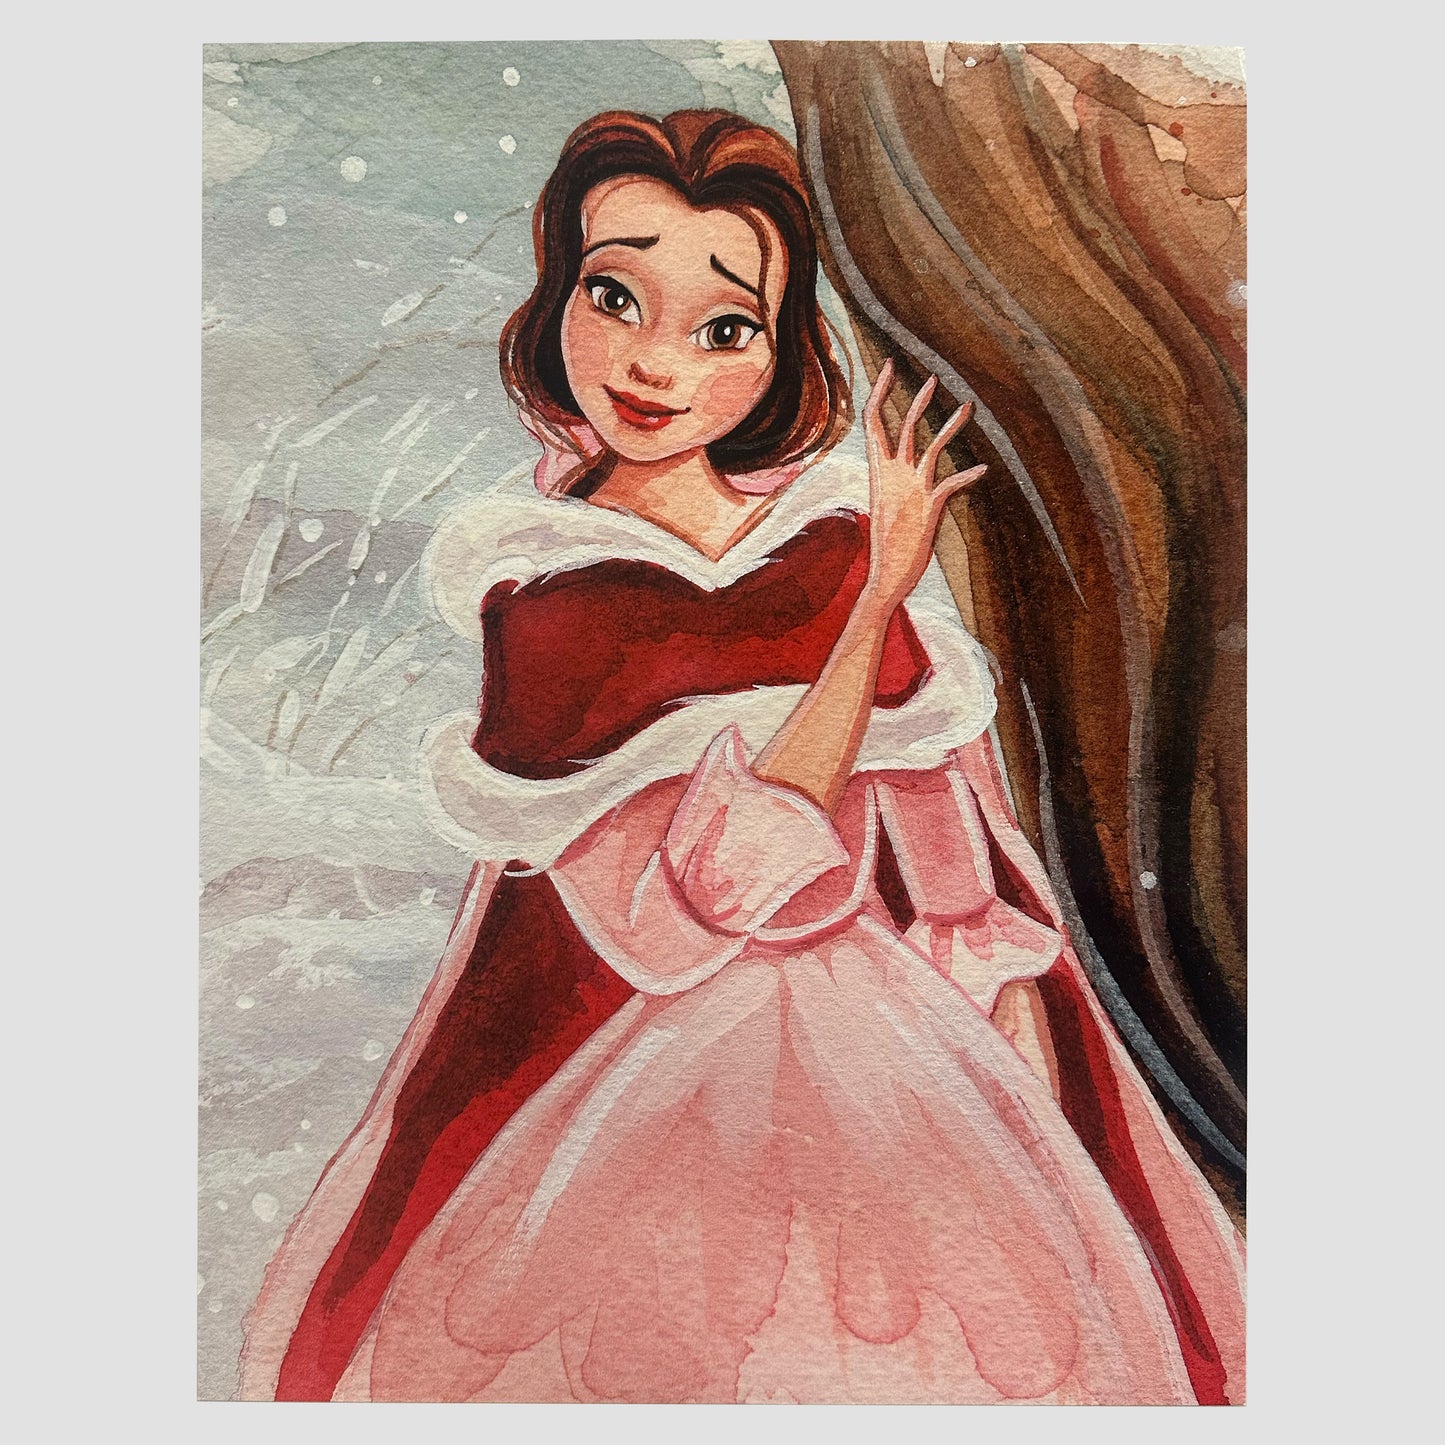 Belle in Winter Dress (Beauty and the Beast) Disney Watercolor Art Print